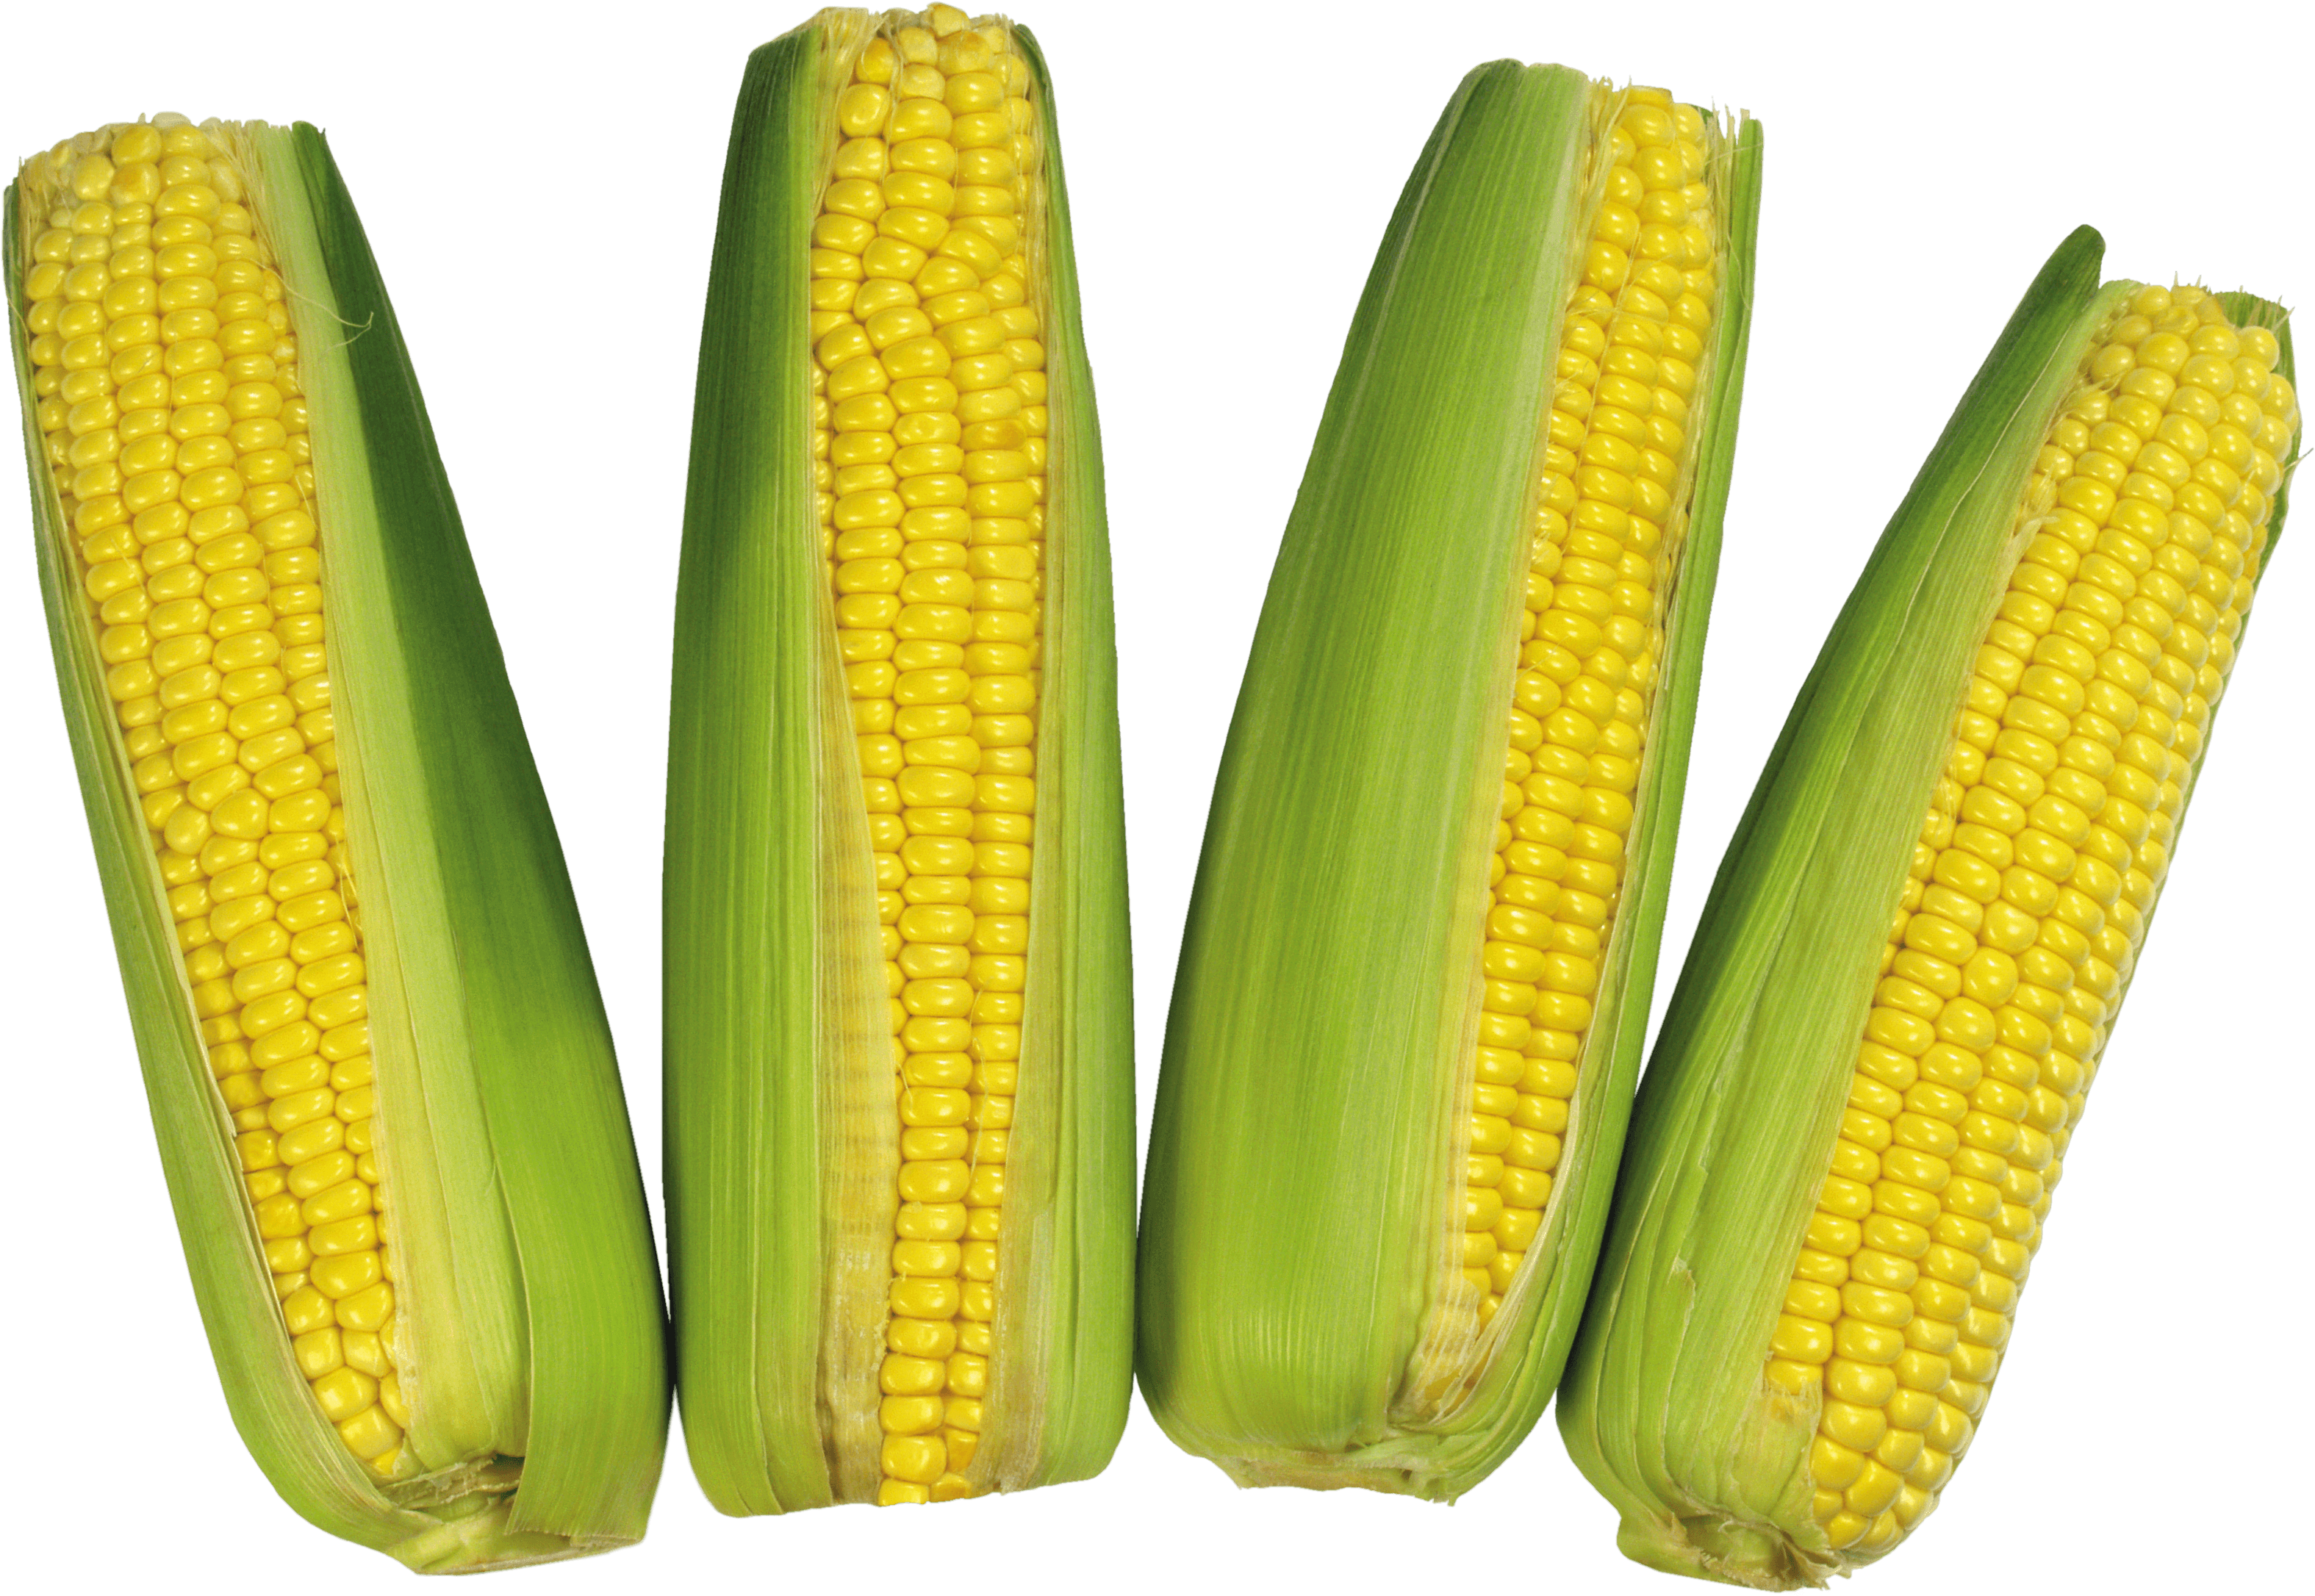 Mays corn. Кукуруза початок. Восковидная кукуруза. Кукуруза это овощ. Качан кукурузы.